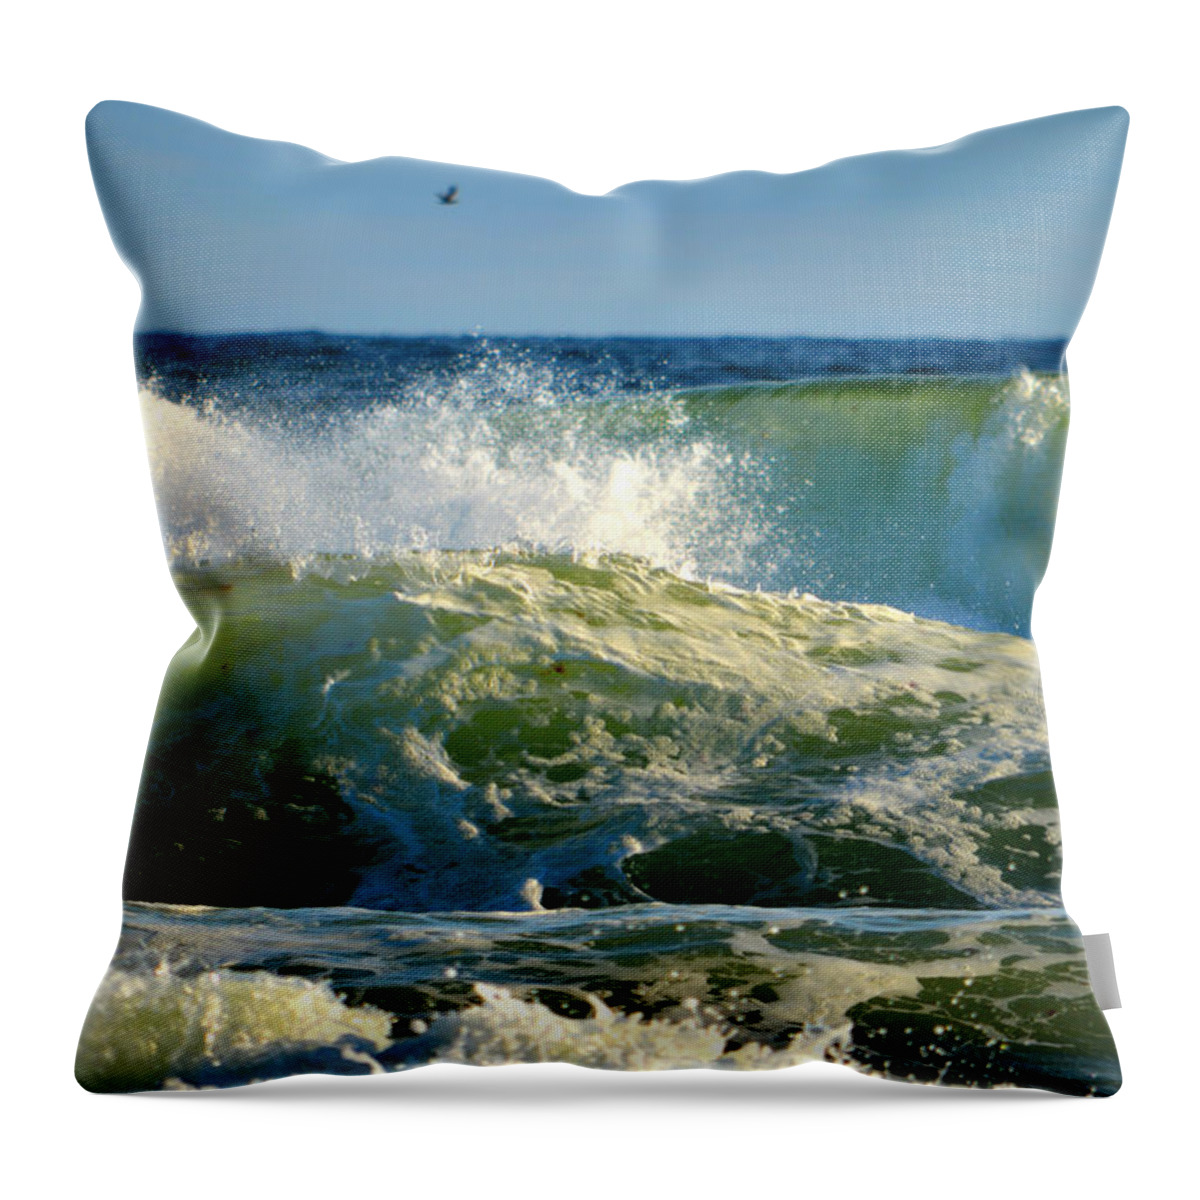 Ocean Throw Pillow featuring the photograph December Ocean Power by Dianne Cowen Cape Cod Photography